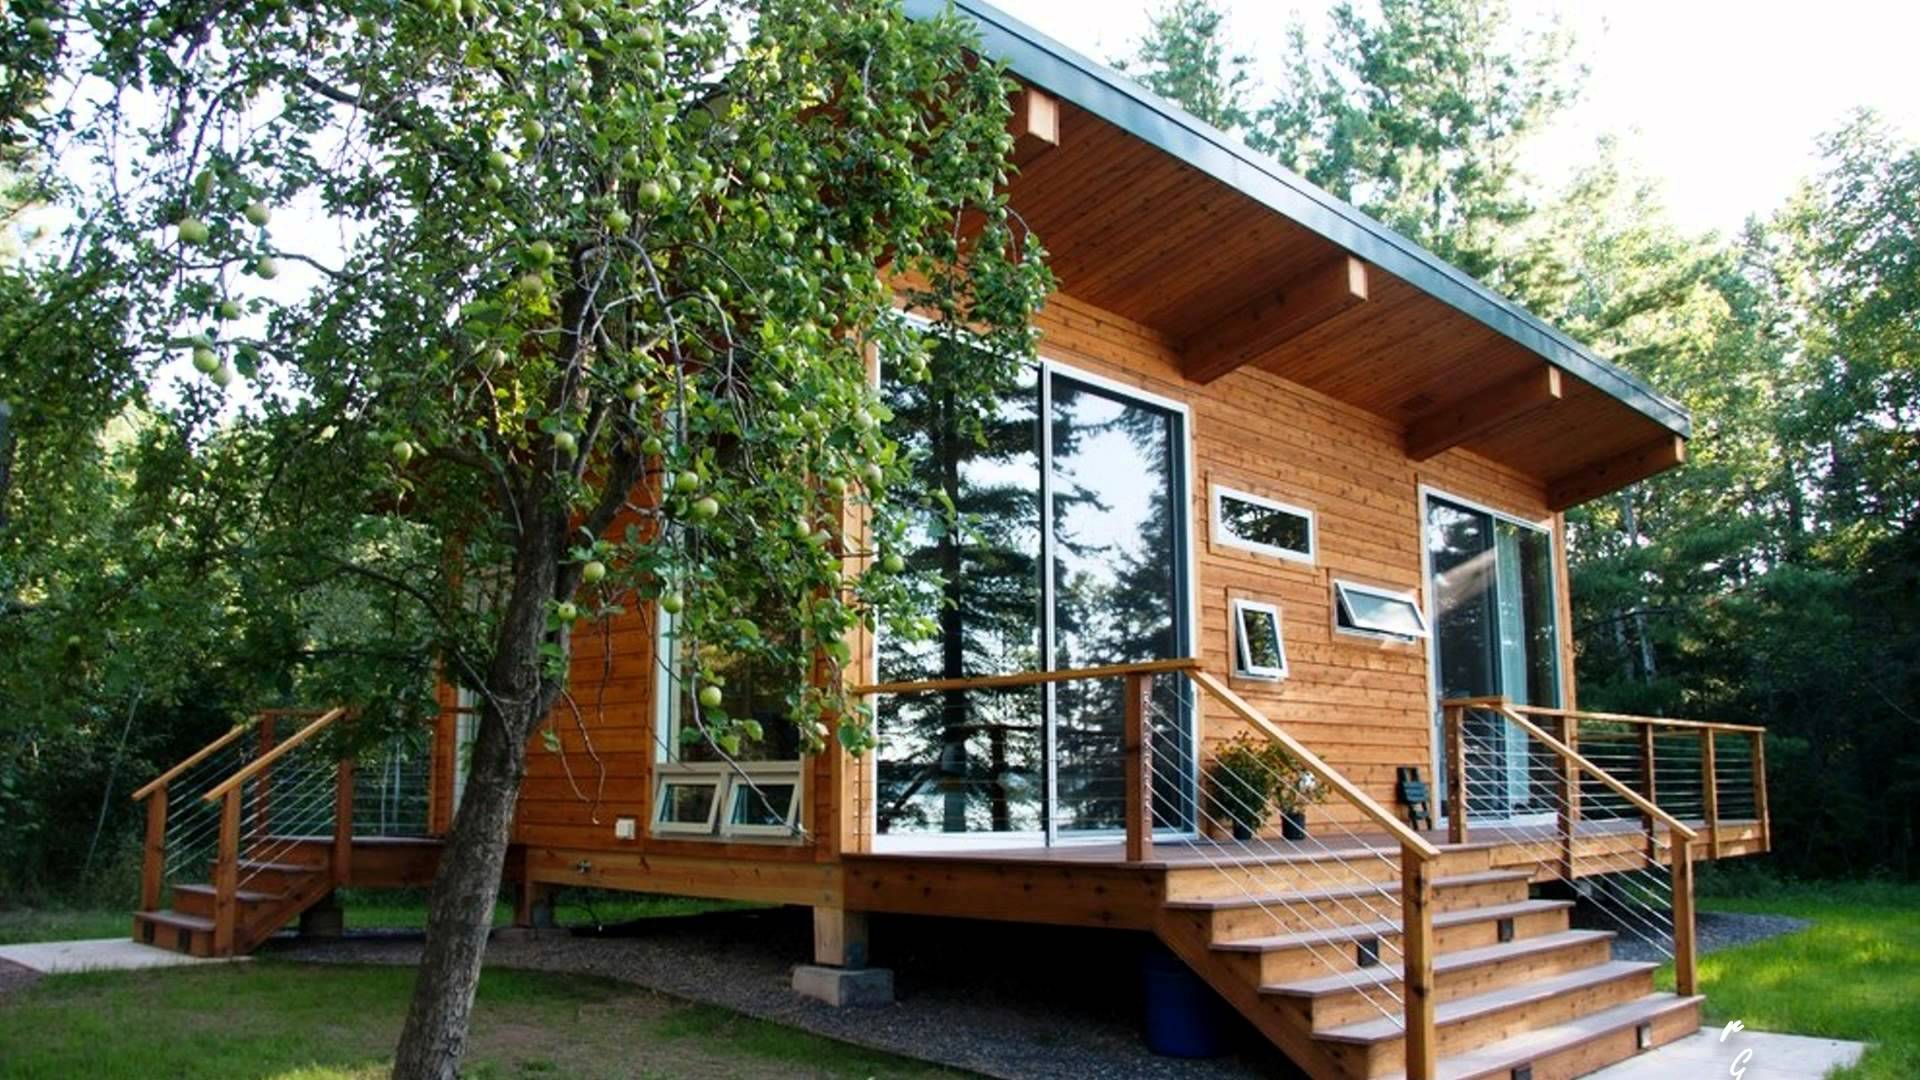 Stunning Modern Cabin Designs - YouTube